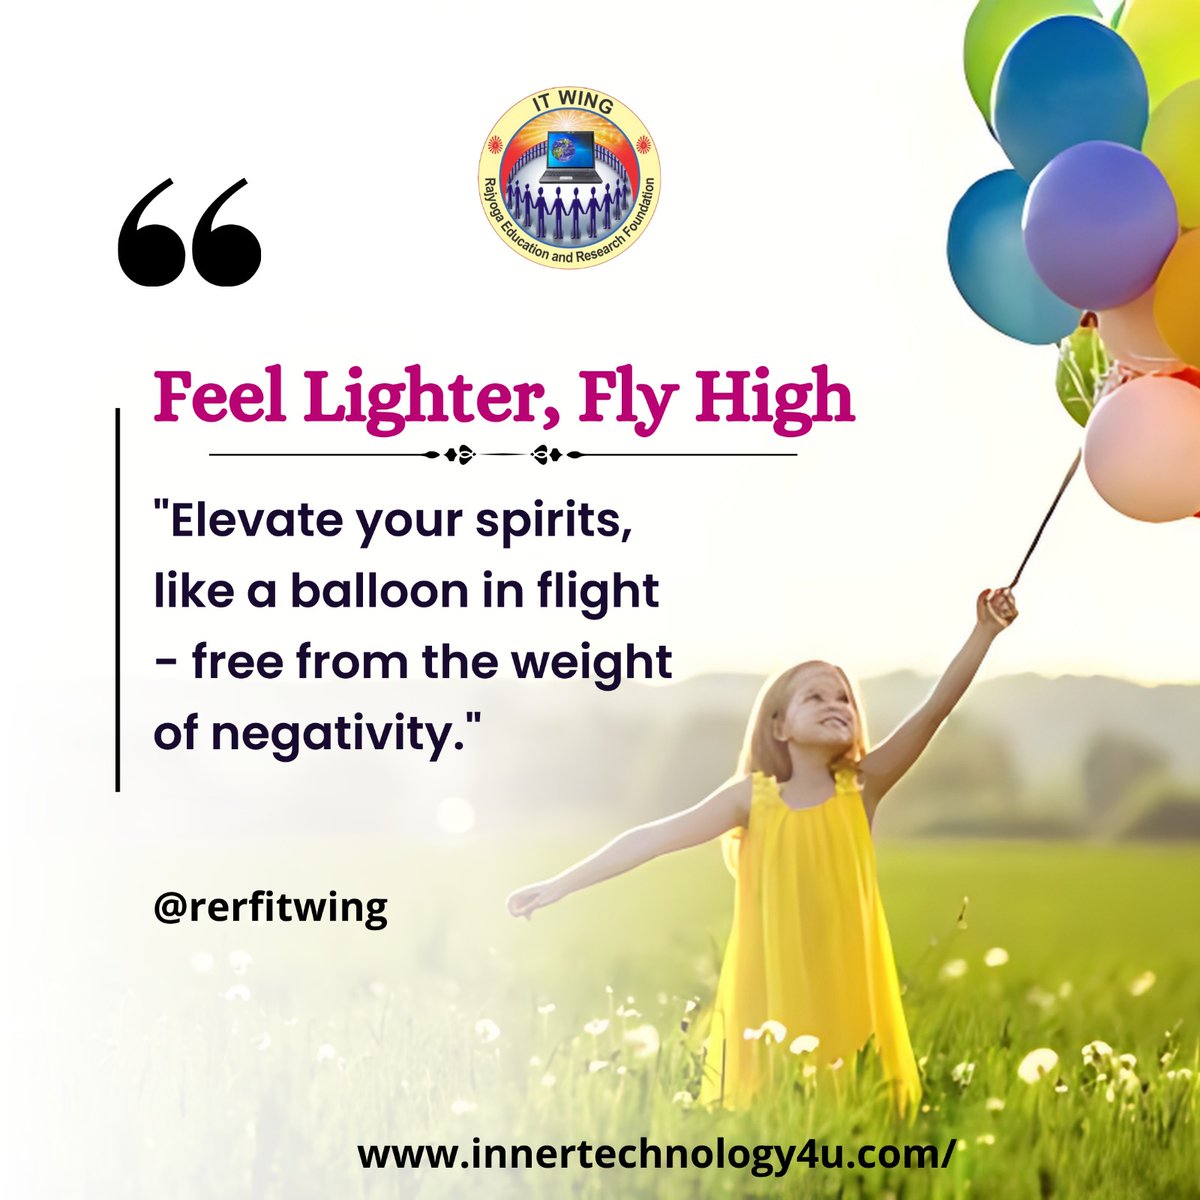 ✨ Feel lighter, fly high 🎈

#MindfulnessJourney #JoyfulMindset #HappinessGoals #InnerPeace #Positivity #HappinessWithin #PositiveThinking #SelfLove #EmbracePositivity #HappyHeart #MindOverMatter #rerfitwing #FearNoMore #selfmastery #braveheart #itwing #delhi #thoughtsoftheday